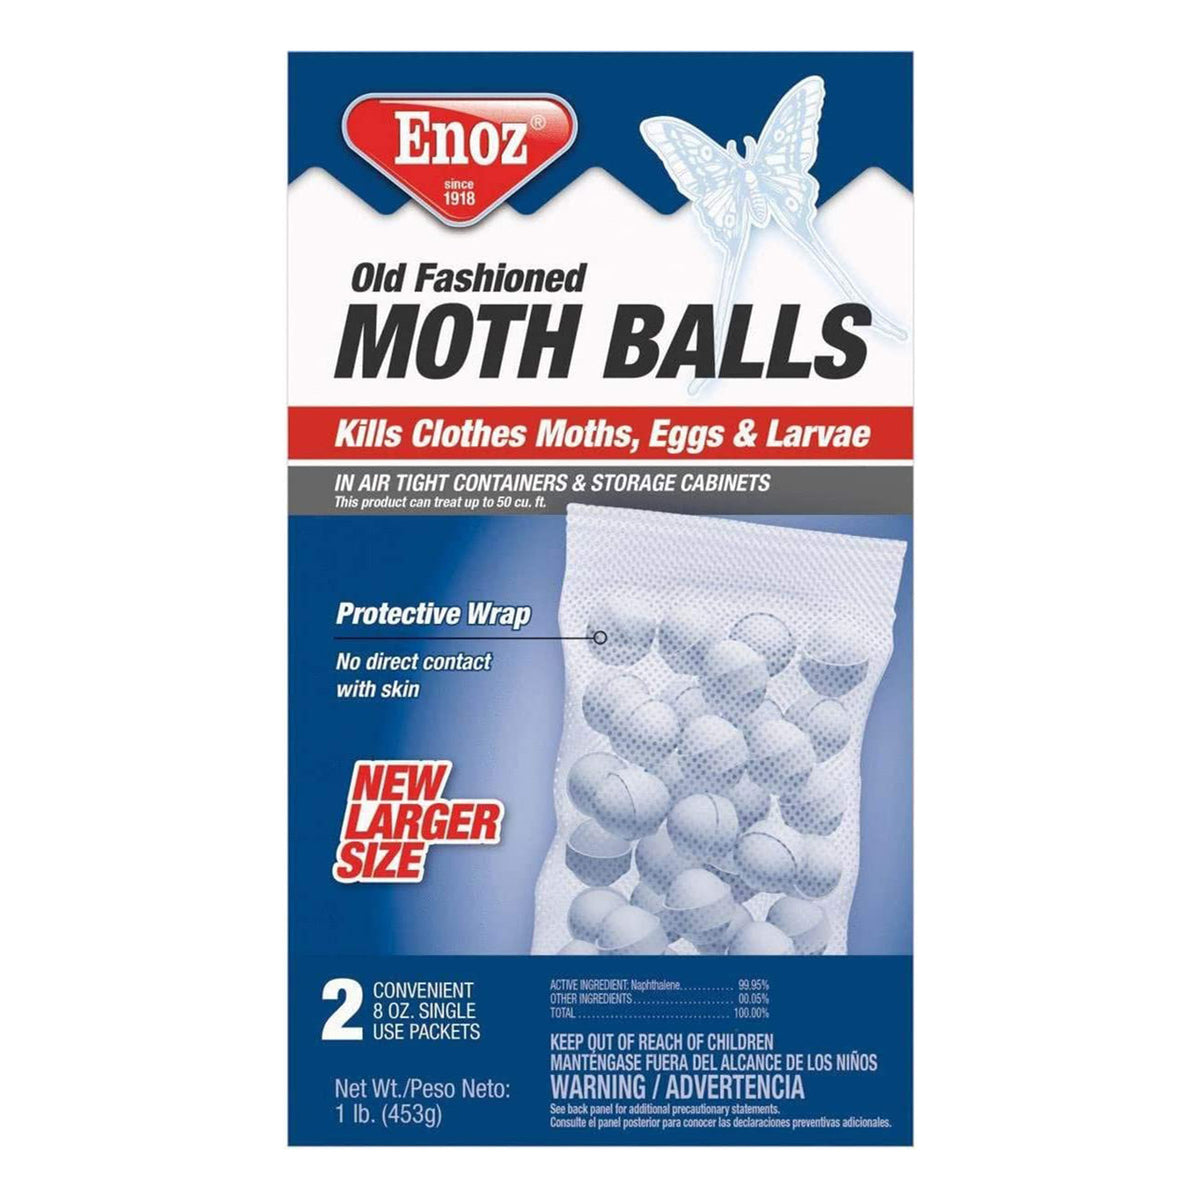 Old fashioned moth balls